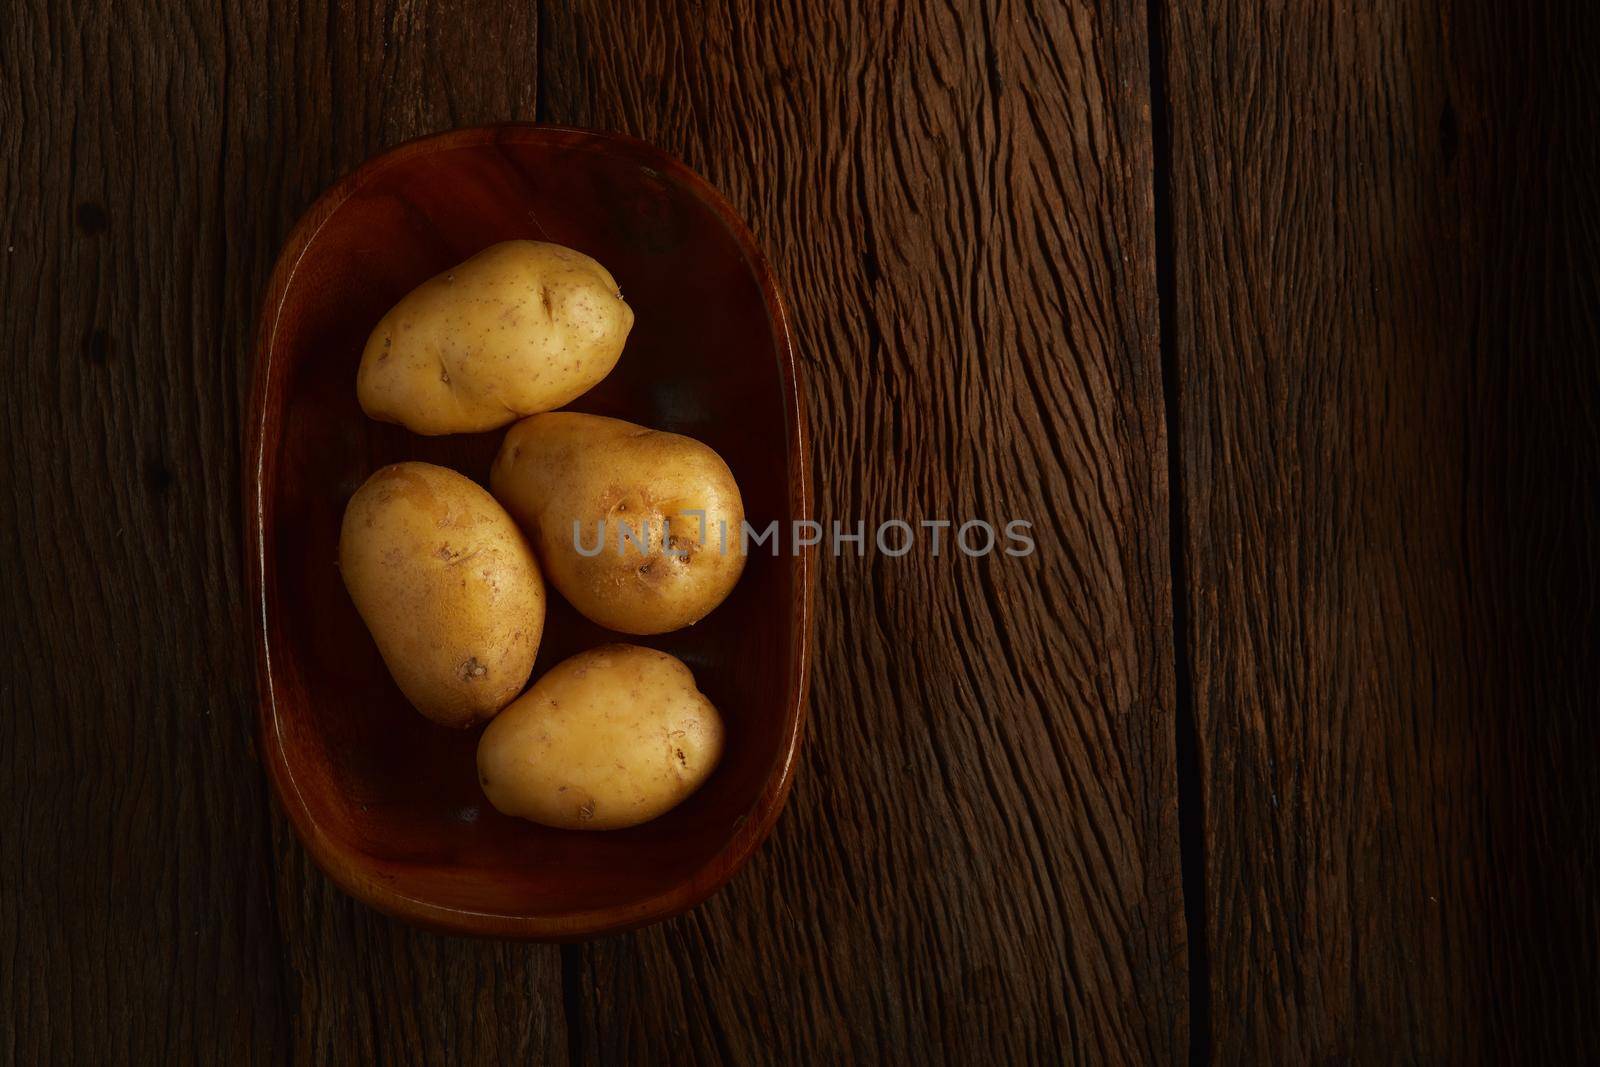 Still life with potato on wood